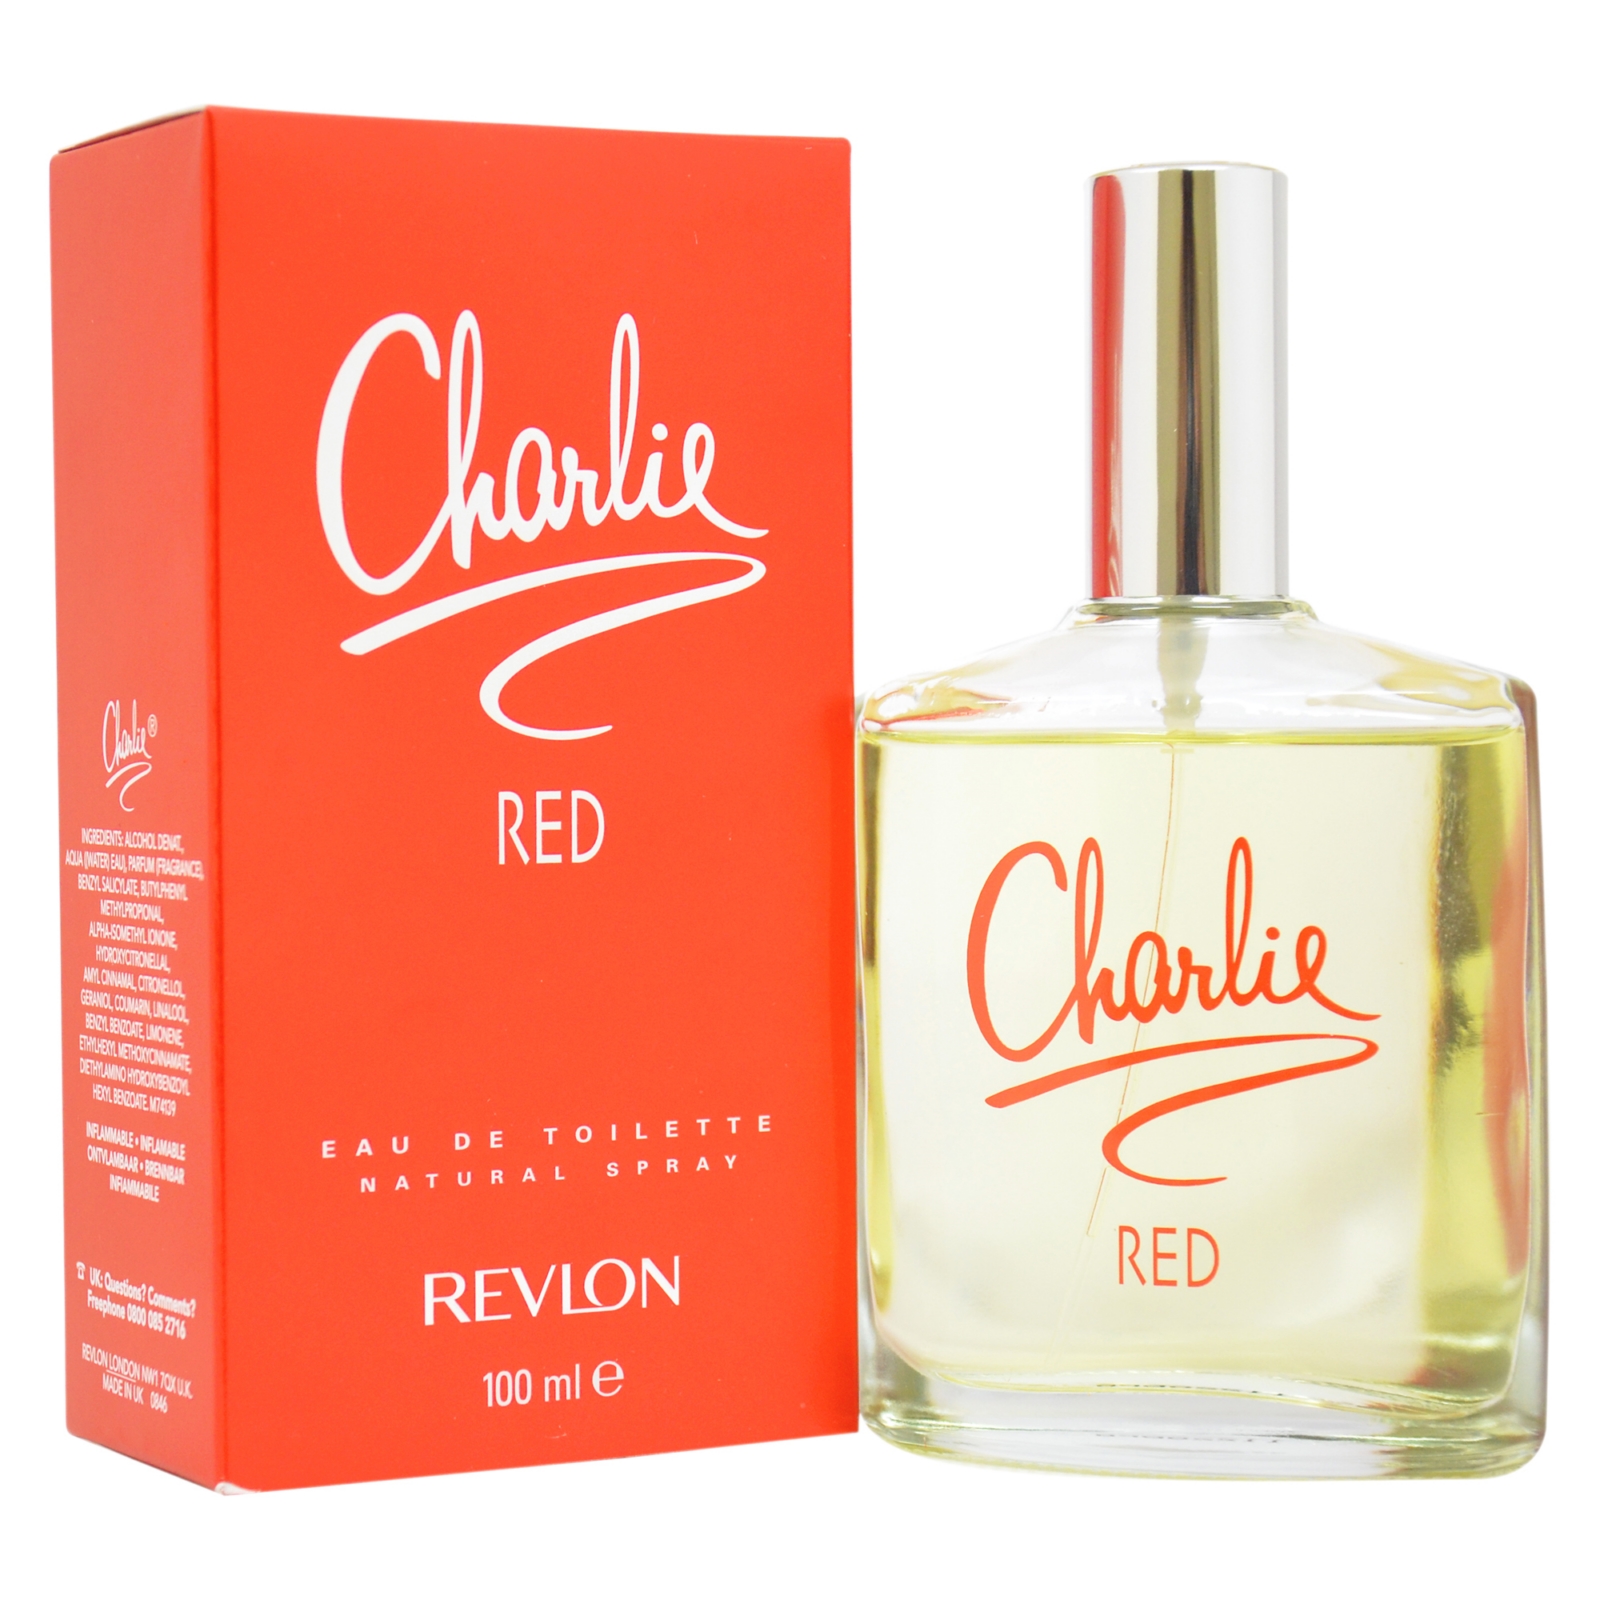 Revlon Charlie Red by  for Women - 3.4 oz EFS Spray